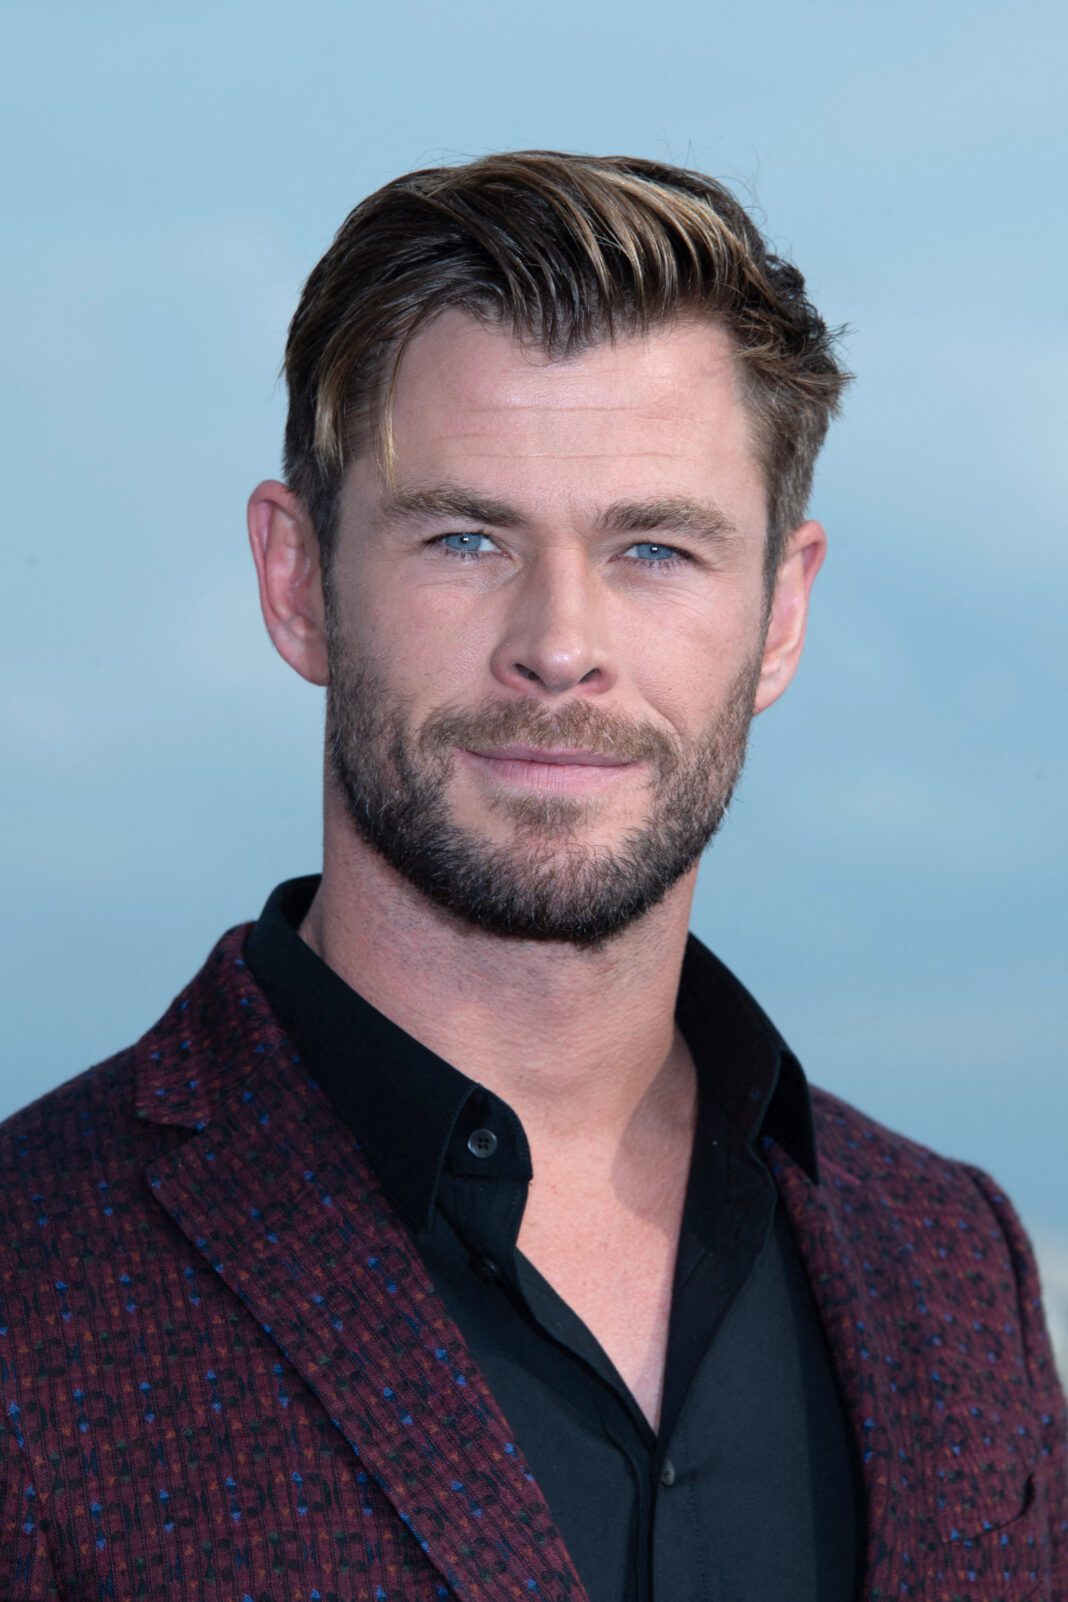 Chris Hemsworth: Μας αποκαλύπτει τους πανέμορφους δίδυμους γιους του! Δες πόσο του μοιάζουν...